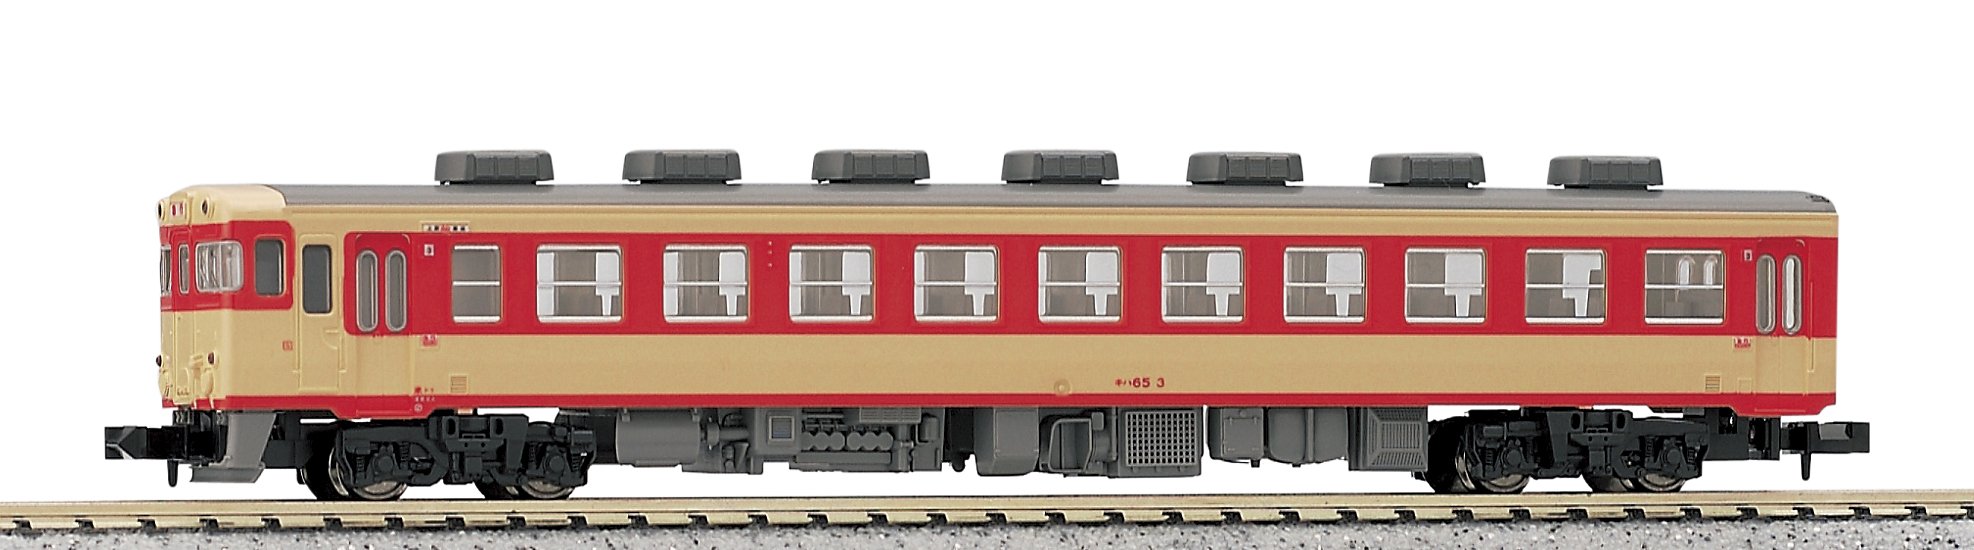 Kato Kiha65 6051 Dieselwagen - Eisenbahnmodell Spur N